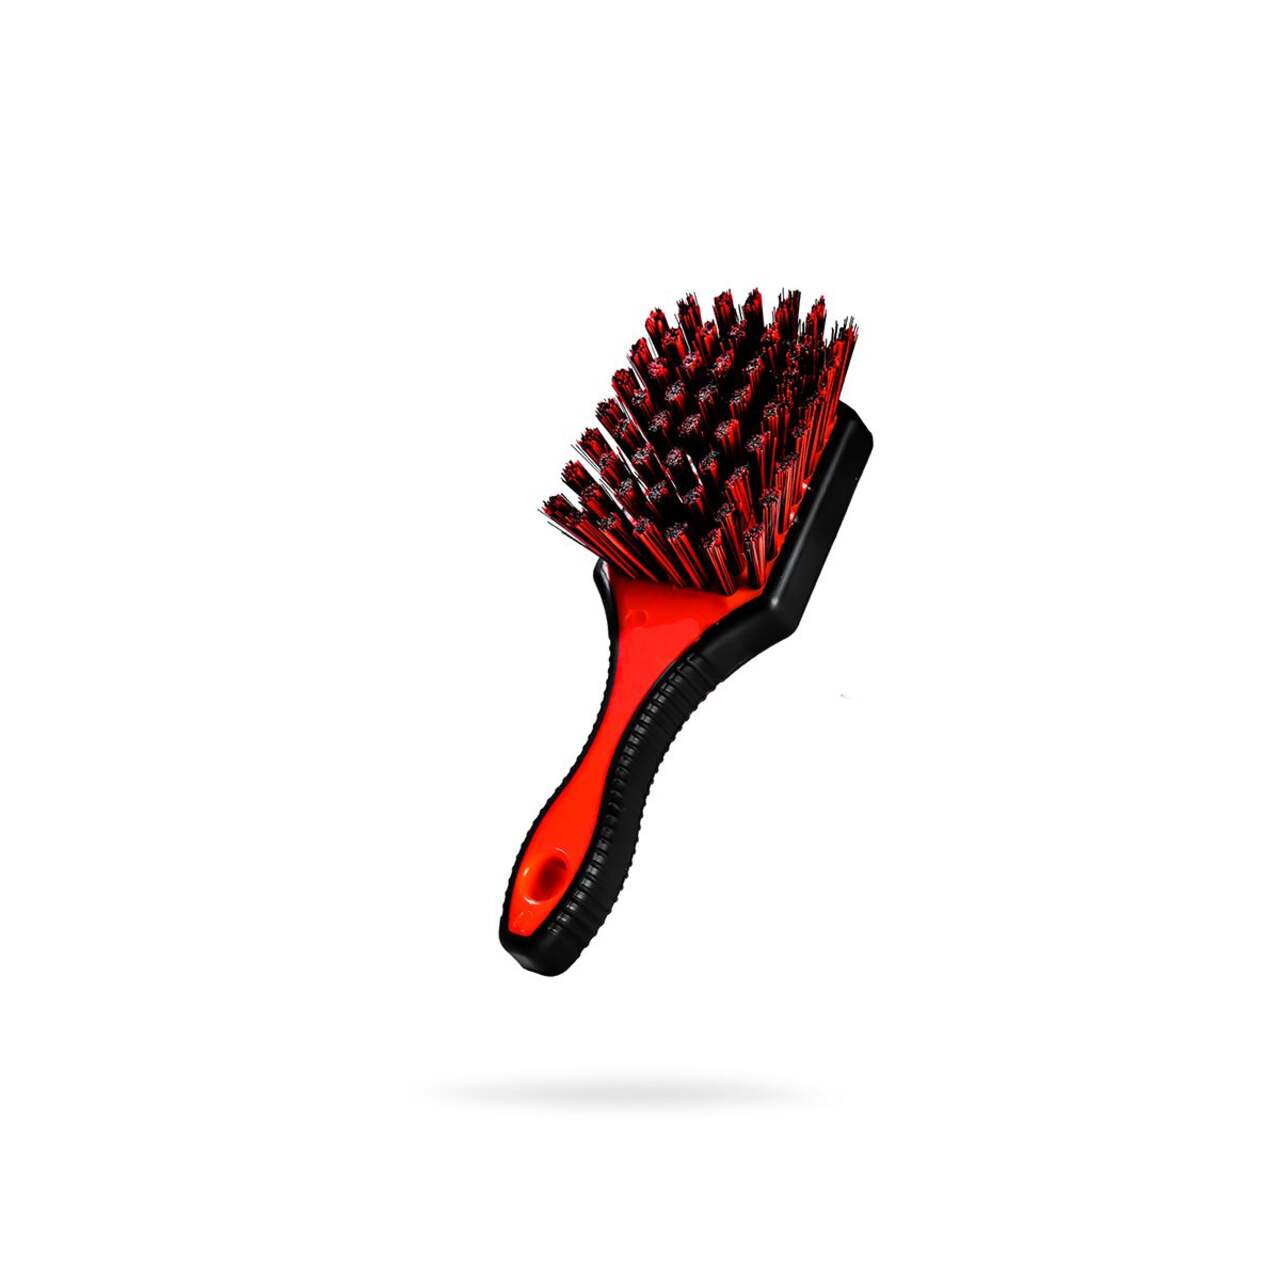 Deep Clean Brush | Maxshine Heavy-Duty Wheel and Carpet Cleaning Brush | 8-Inch Long, Durable Bristles